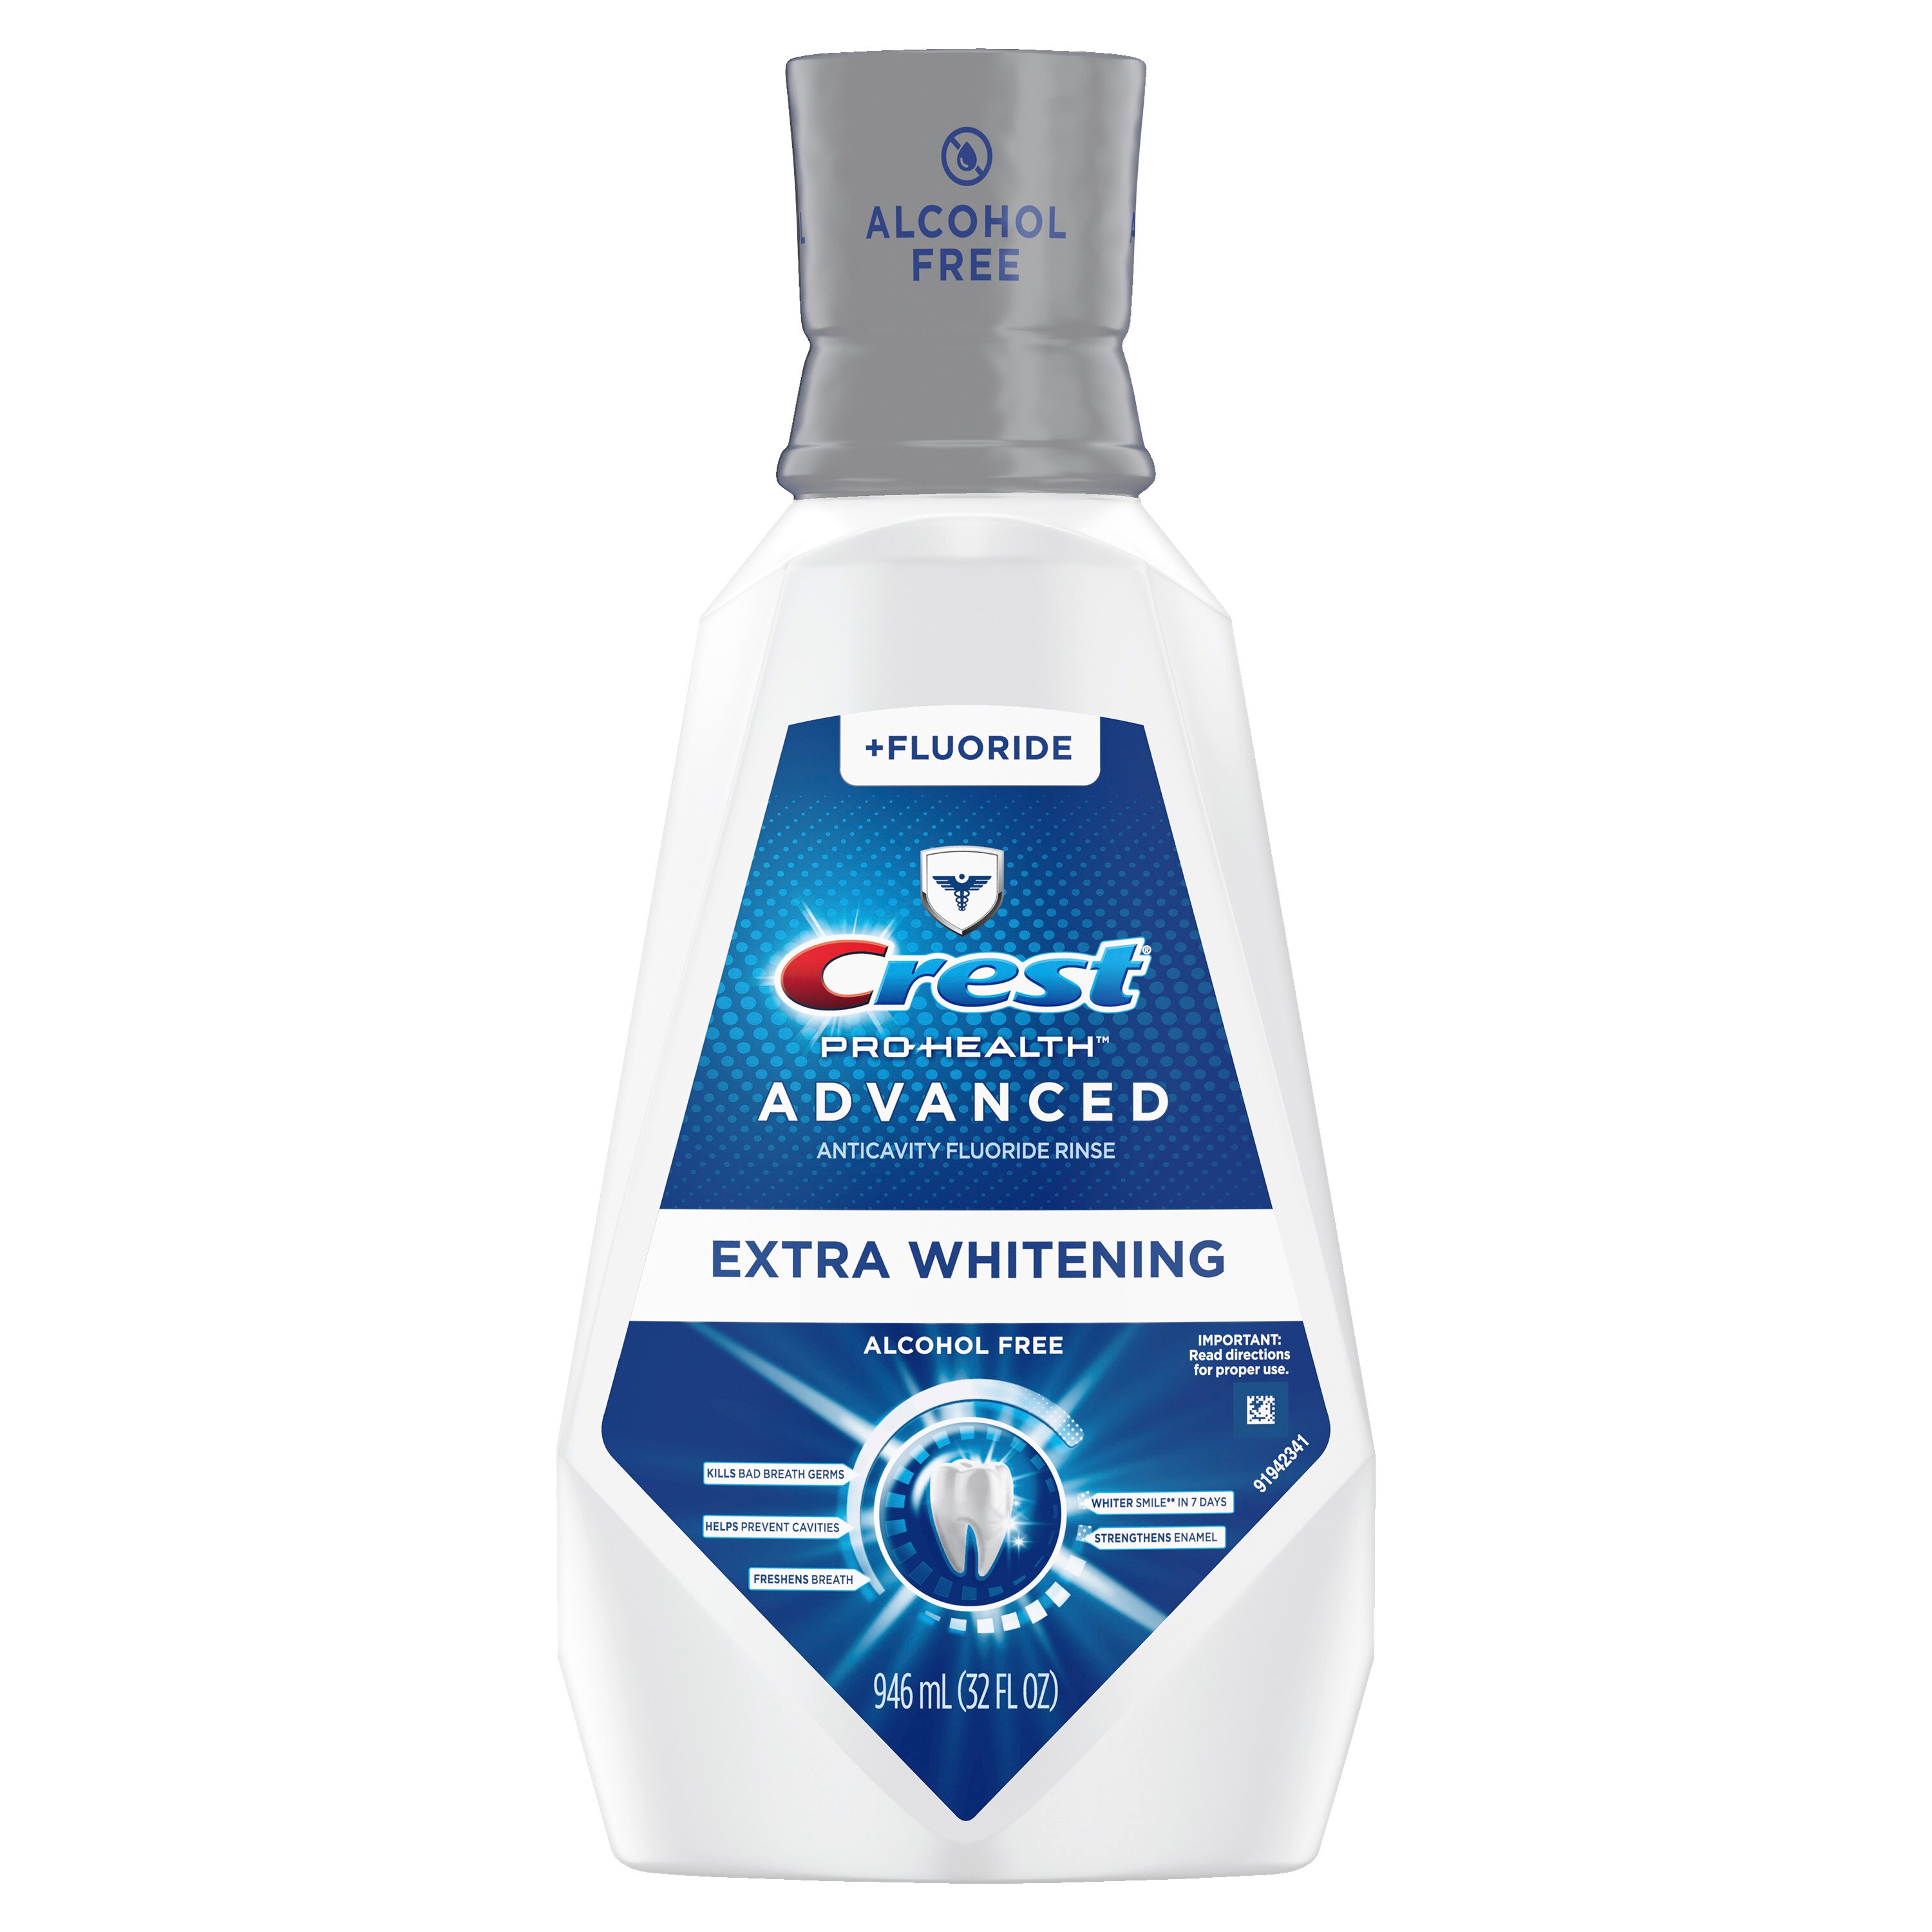 Crest Pro-Health Advanced Extra Whitening Anticavity Fluoride Rinse, Alcohol-Free, 32 OZ